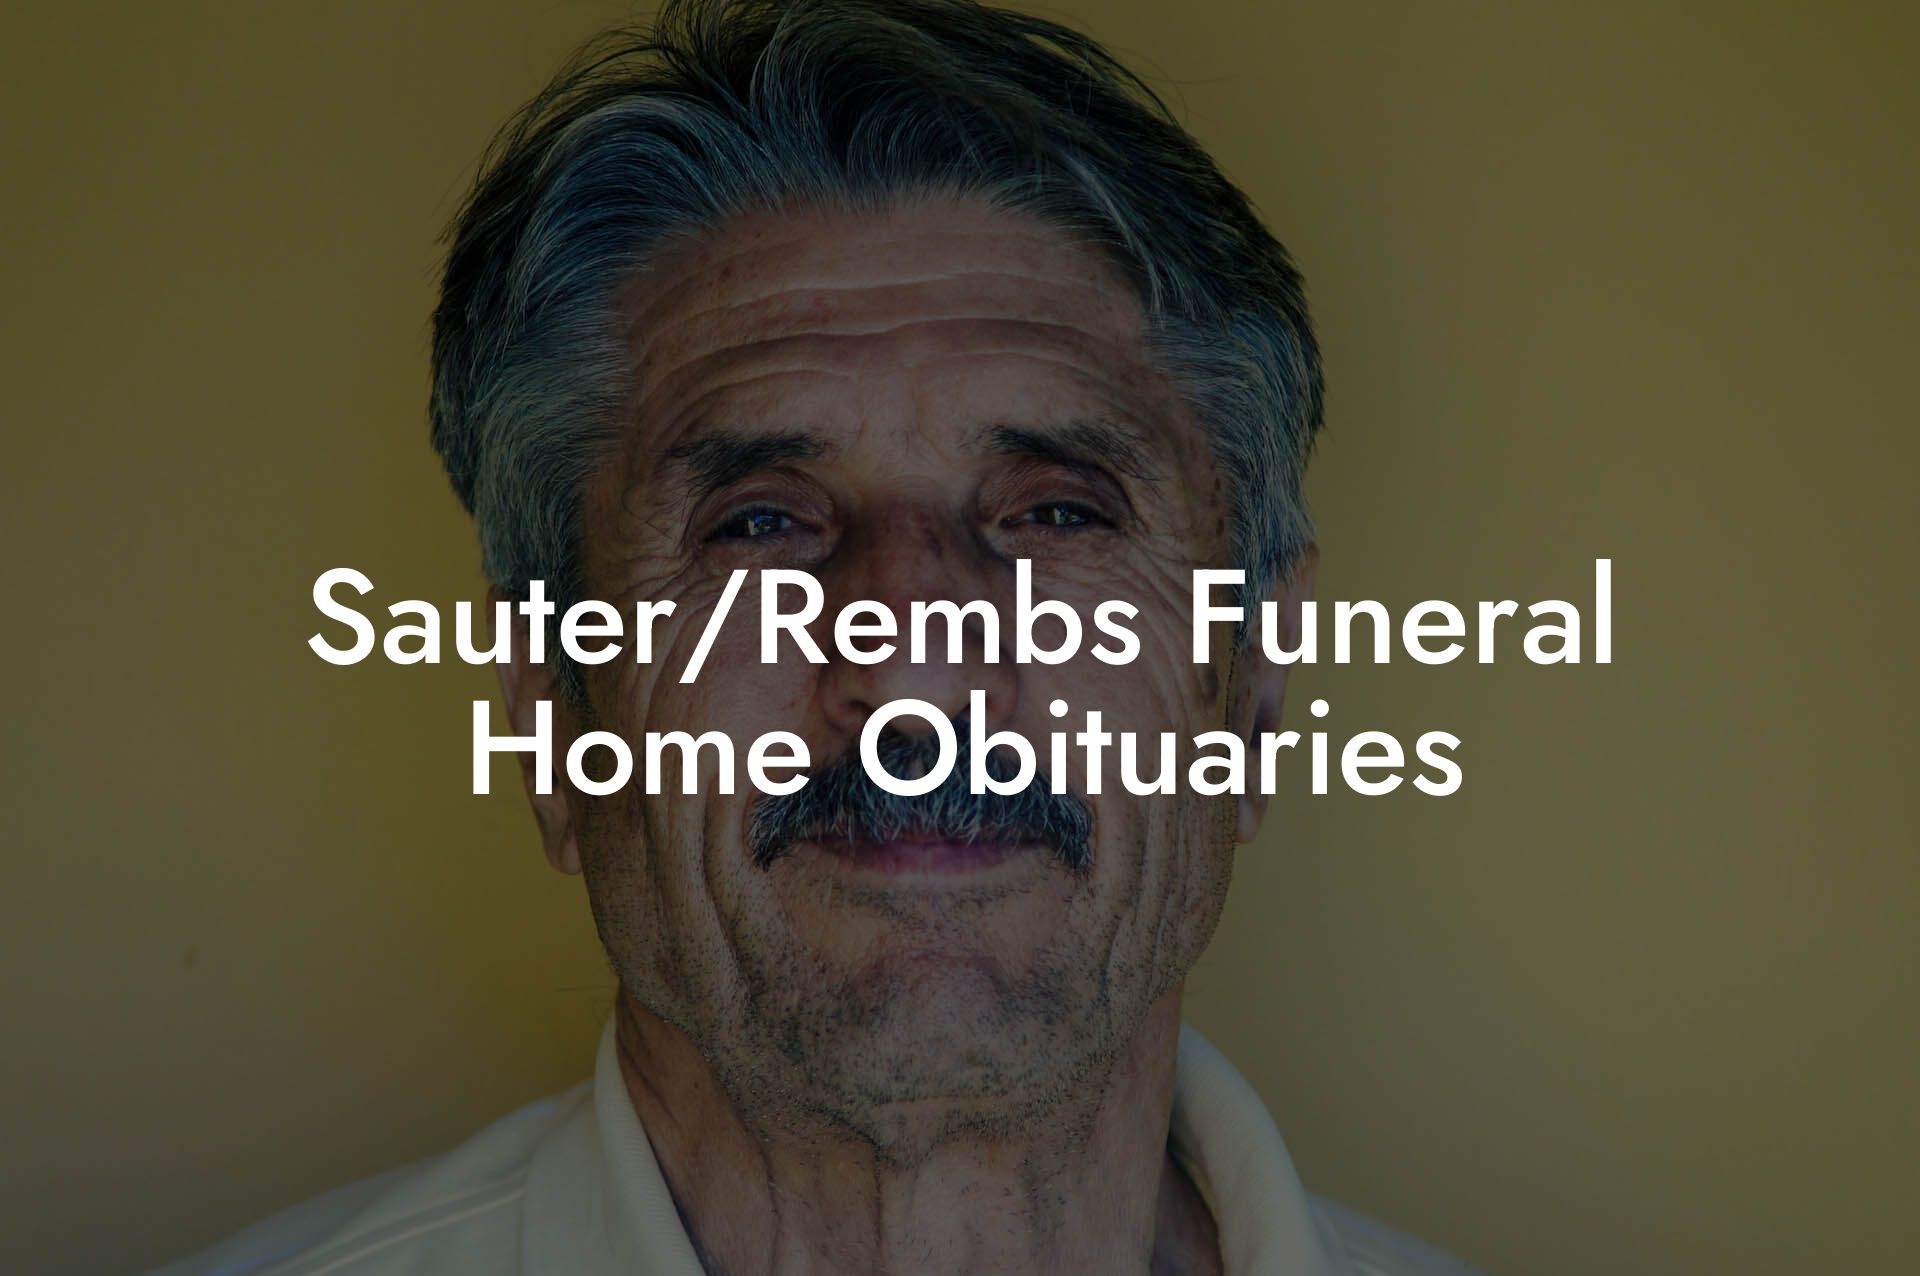 Sauter/Rembs Funeral Home Obituaries